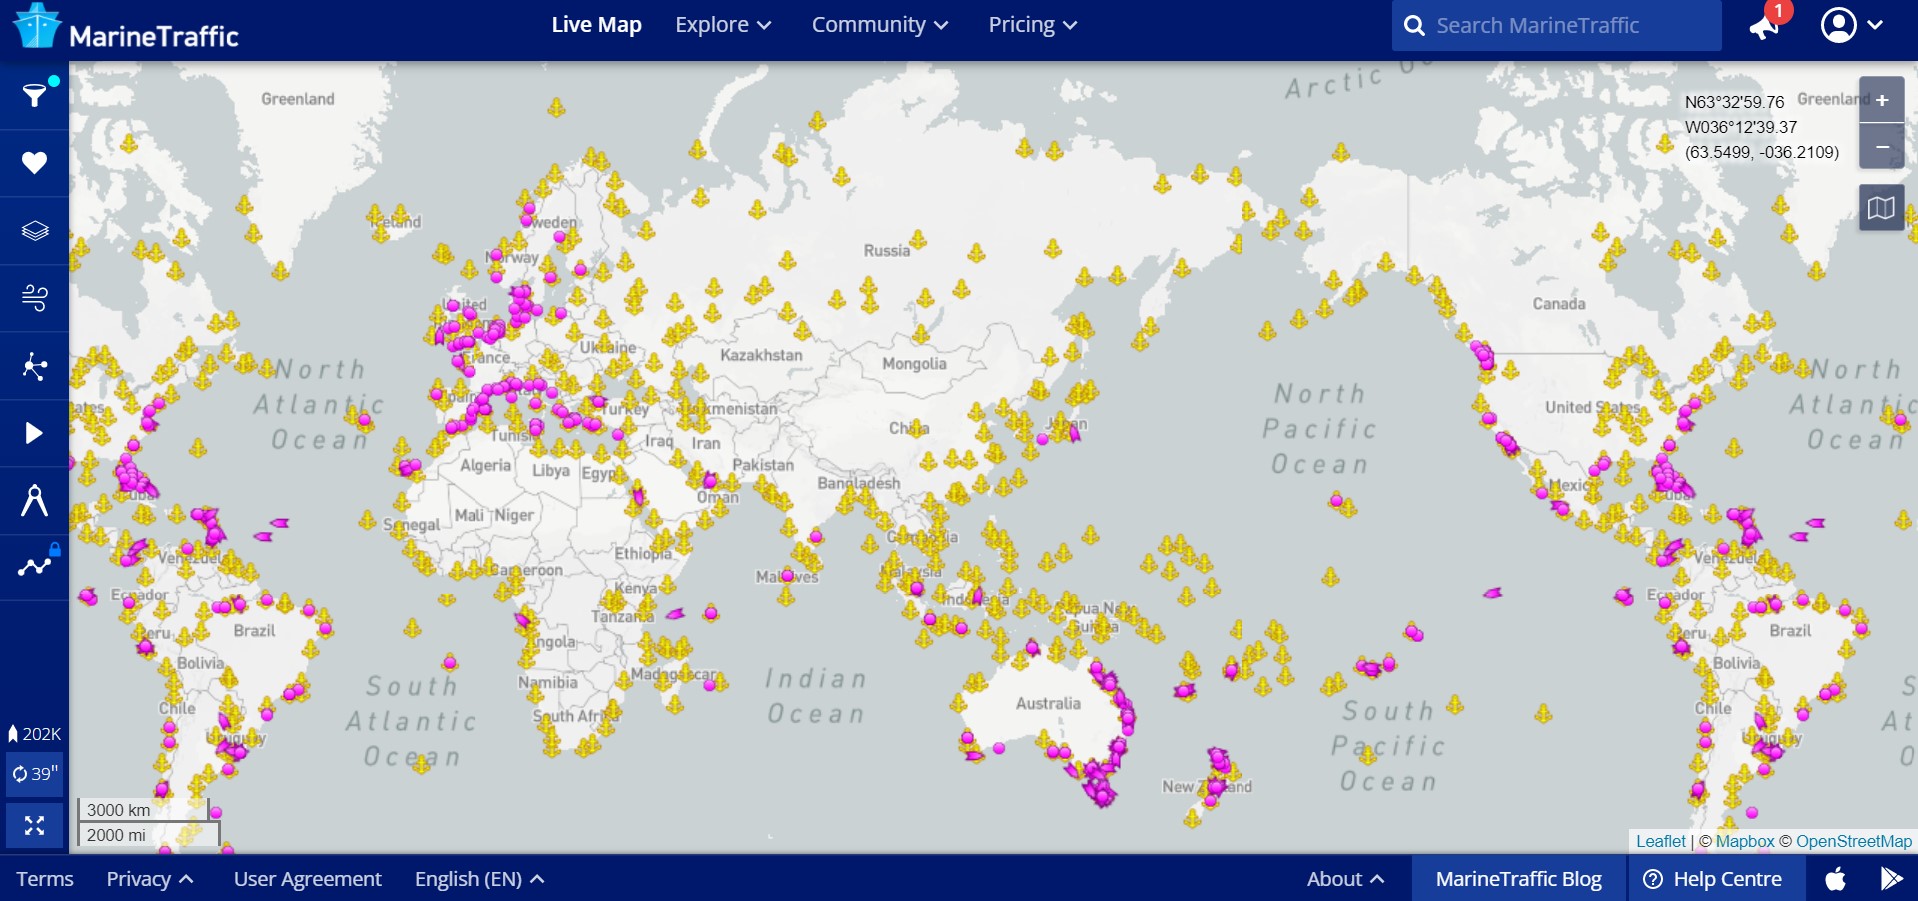 MarineTraffic Live Map